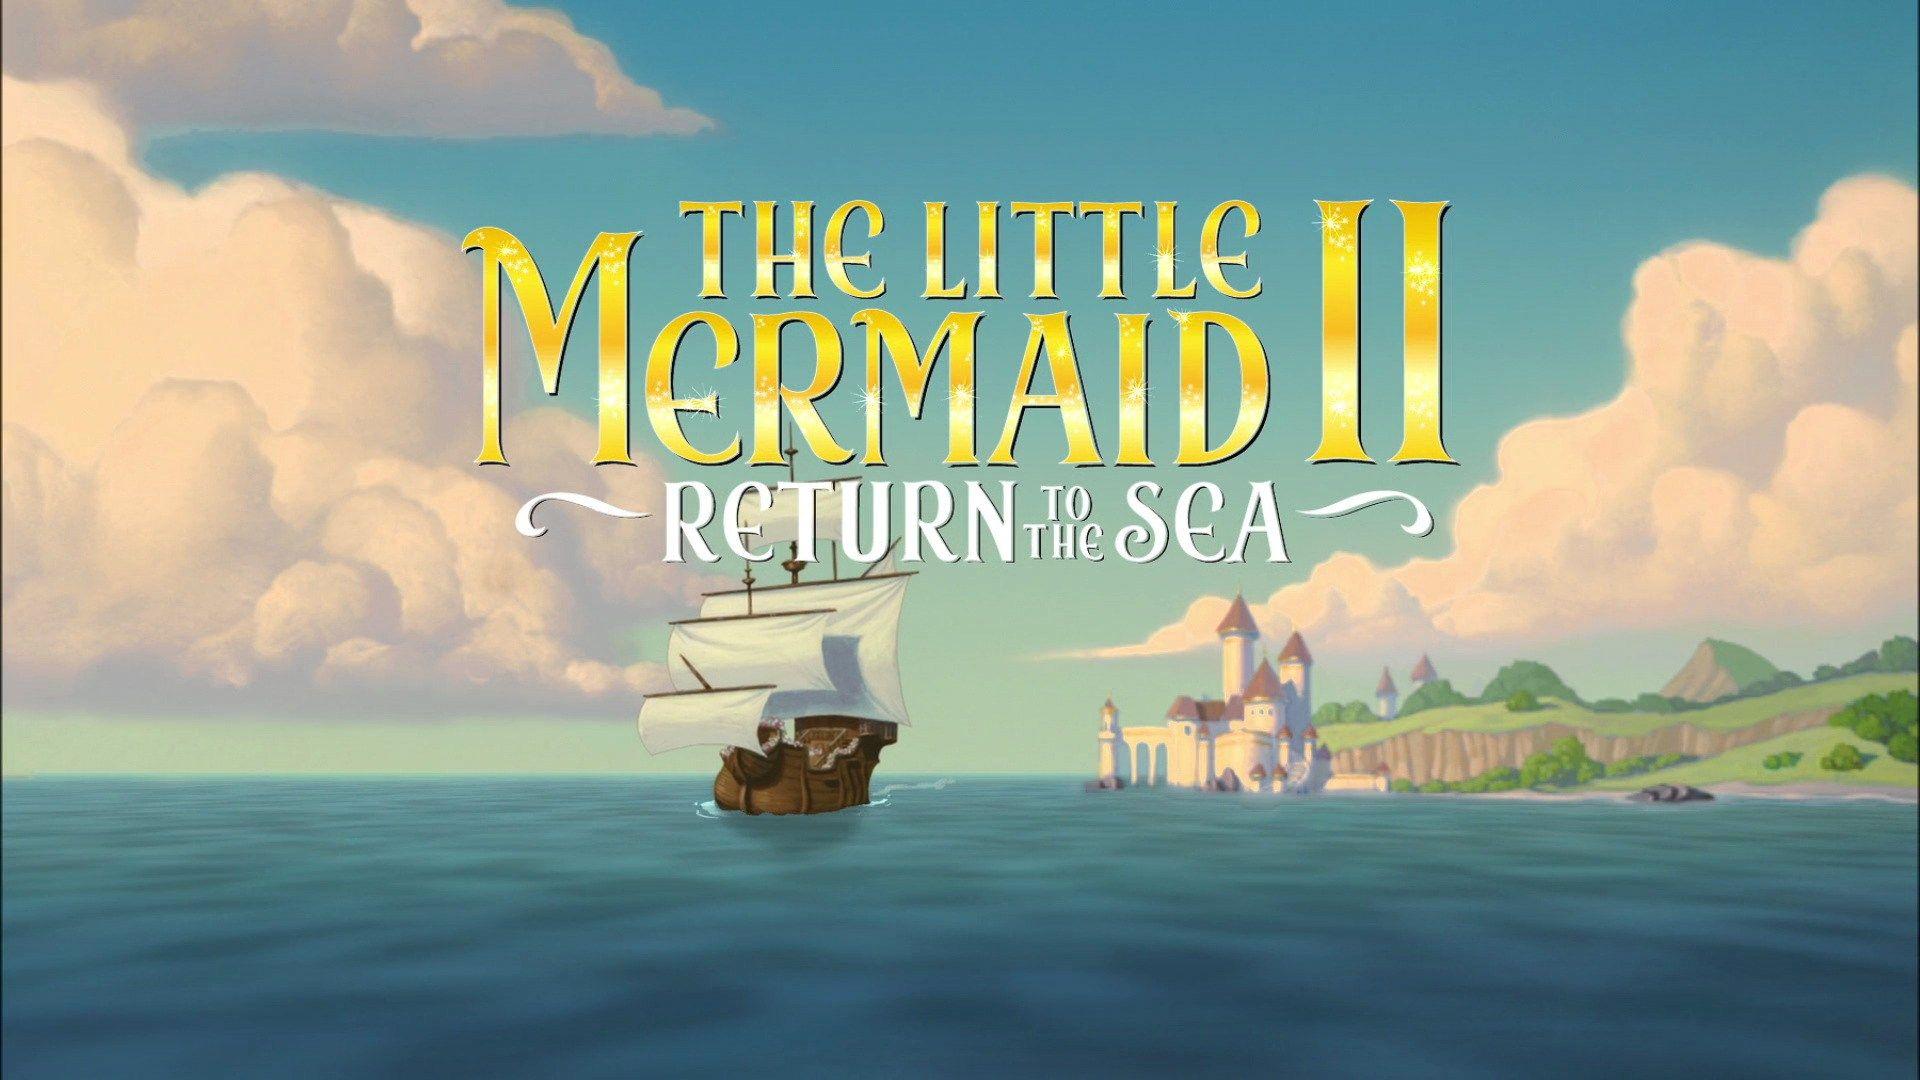 The Little Mermaid 2 Logo - Image - The Little Mermaid 2 - Return to the Sea Logo.jpg | Film and ...